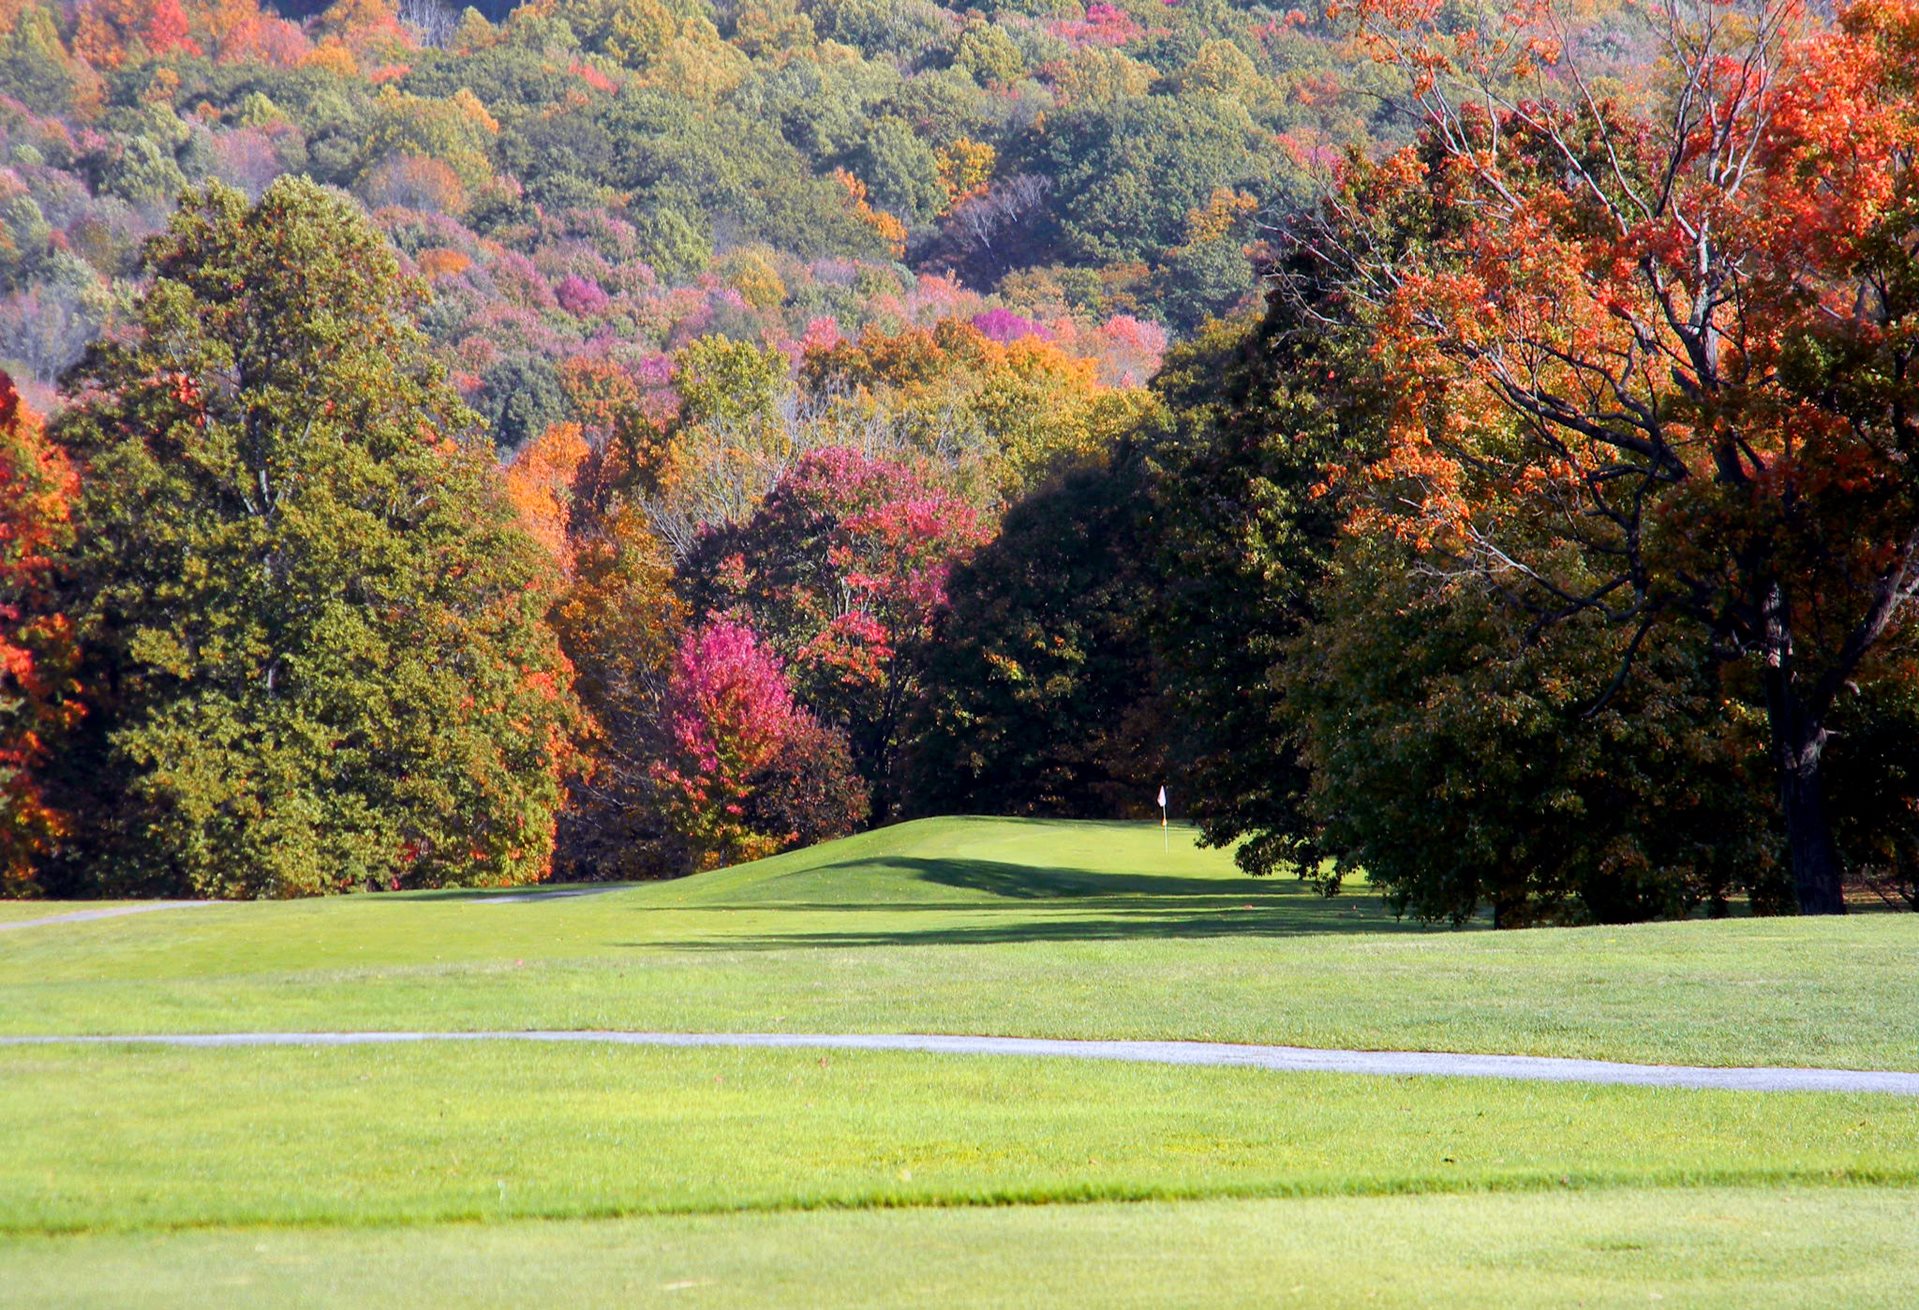 Cleveland Metroparks Begins Management of Ironwood Golf Course